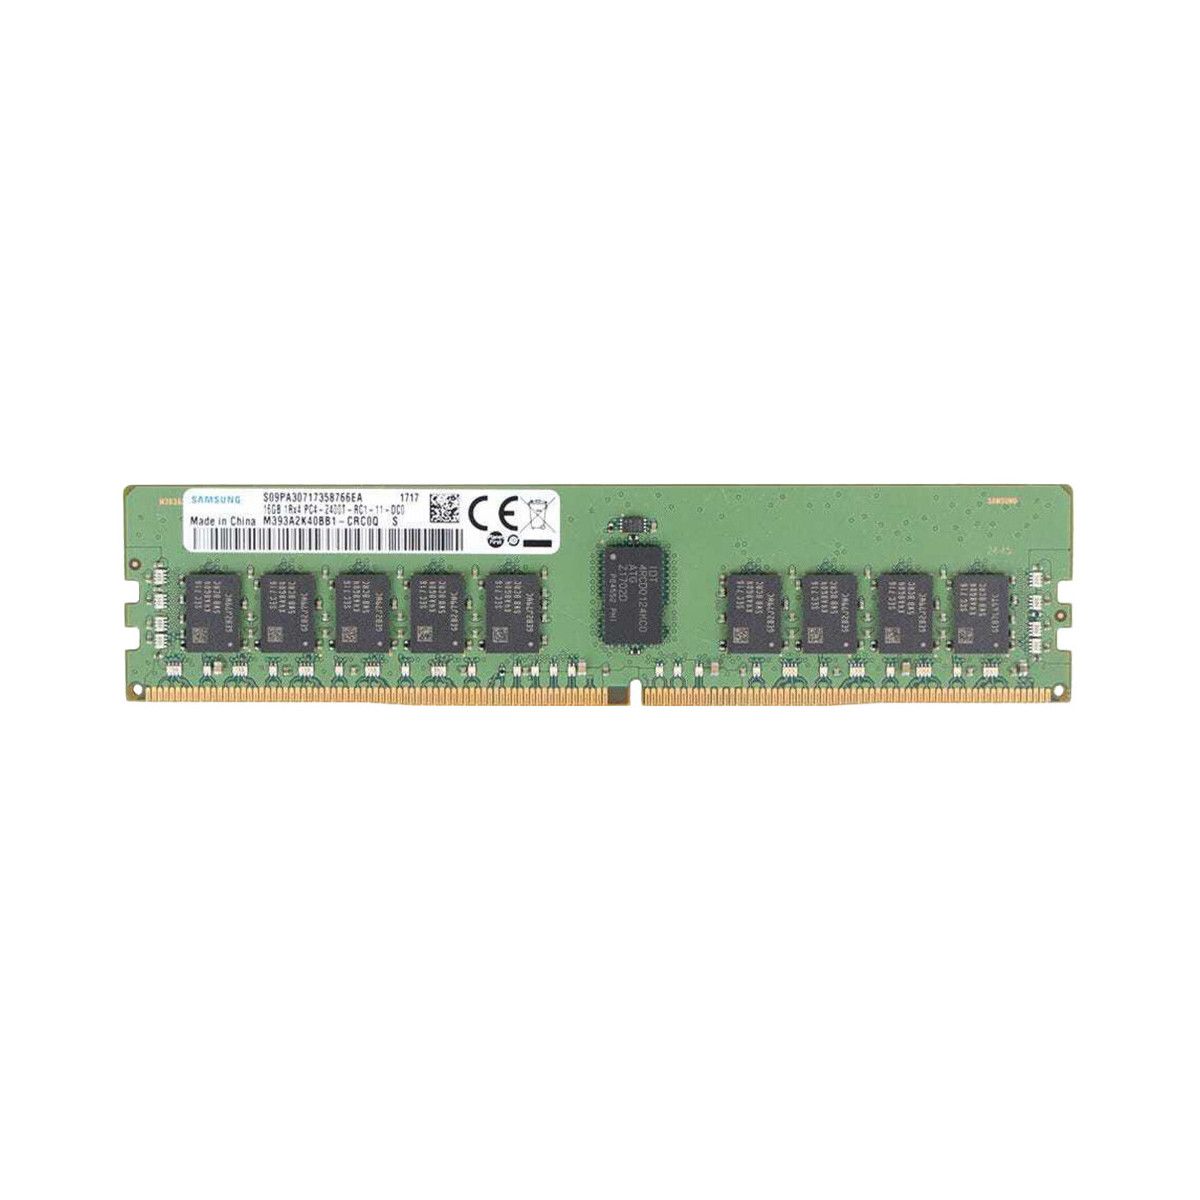 A8711887-MS - Memstar 1x 16GB DDR4-2400 RDIMM PC4-19200T-R - Memorie OEM compatibilă Mem-Star 1 - Memstar 